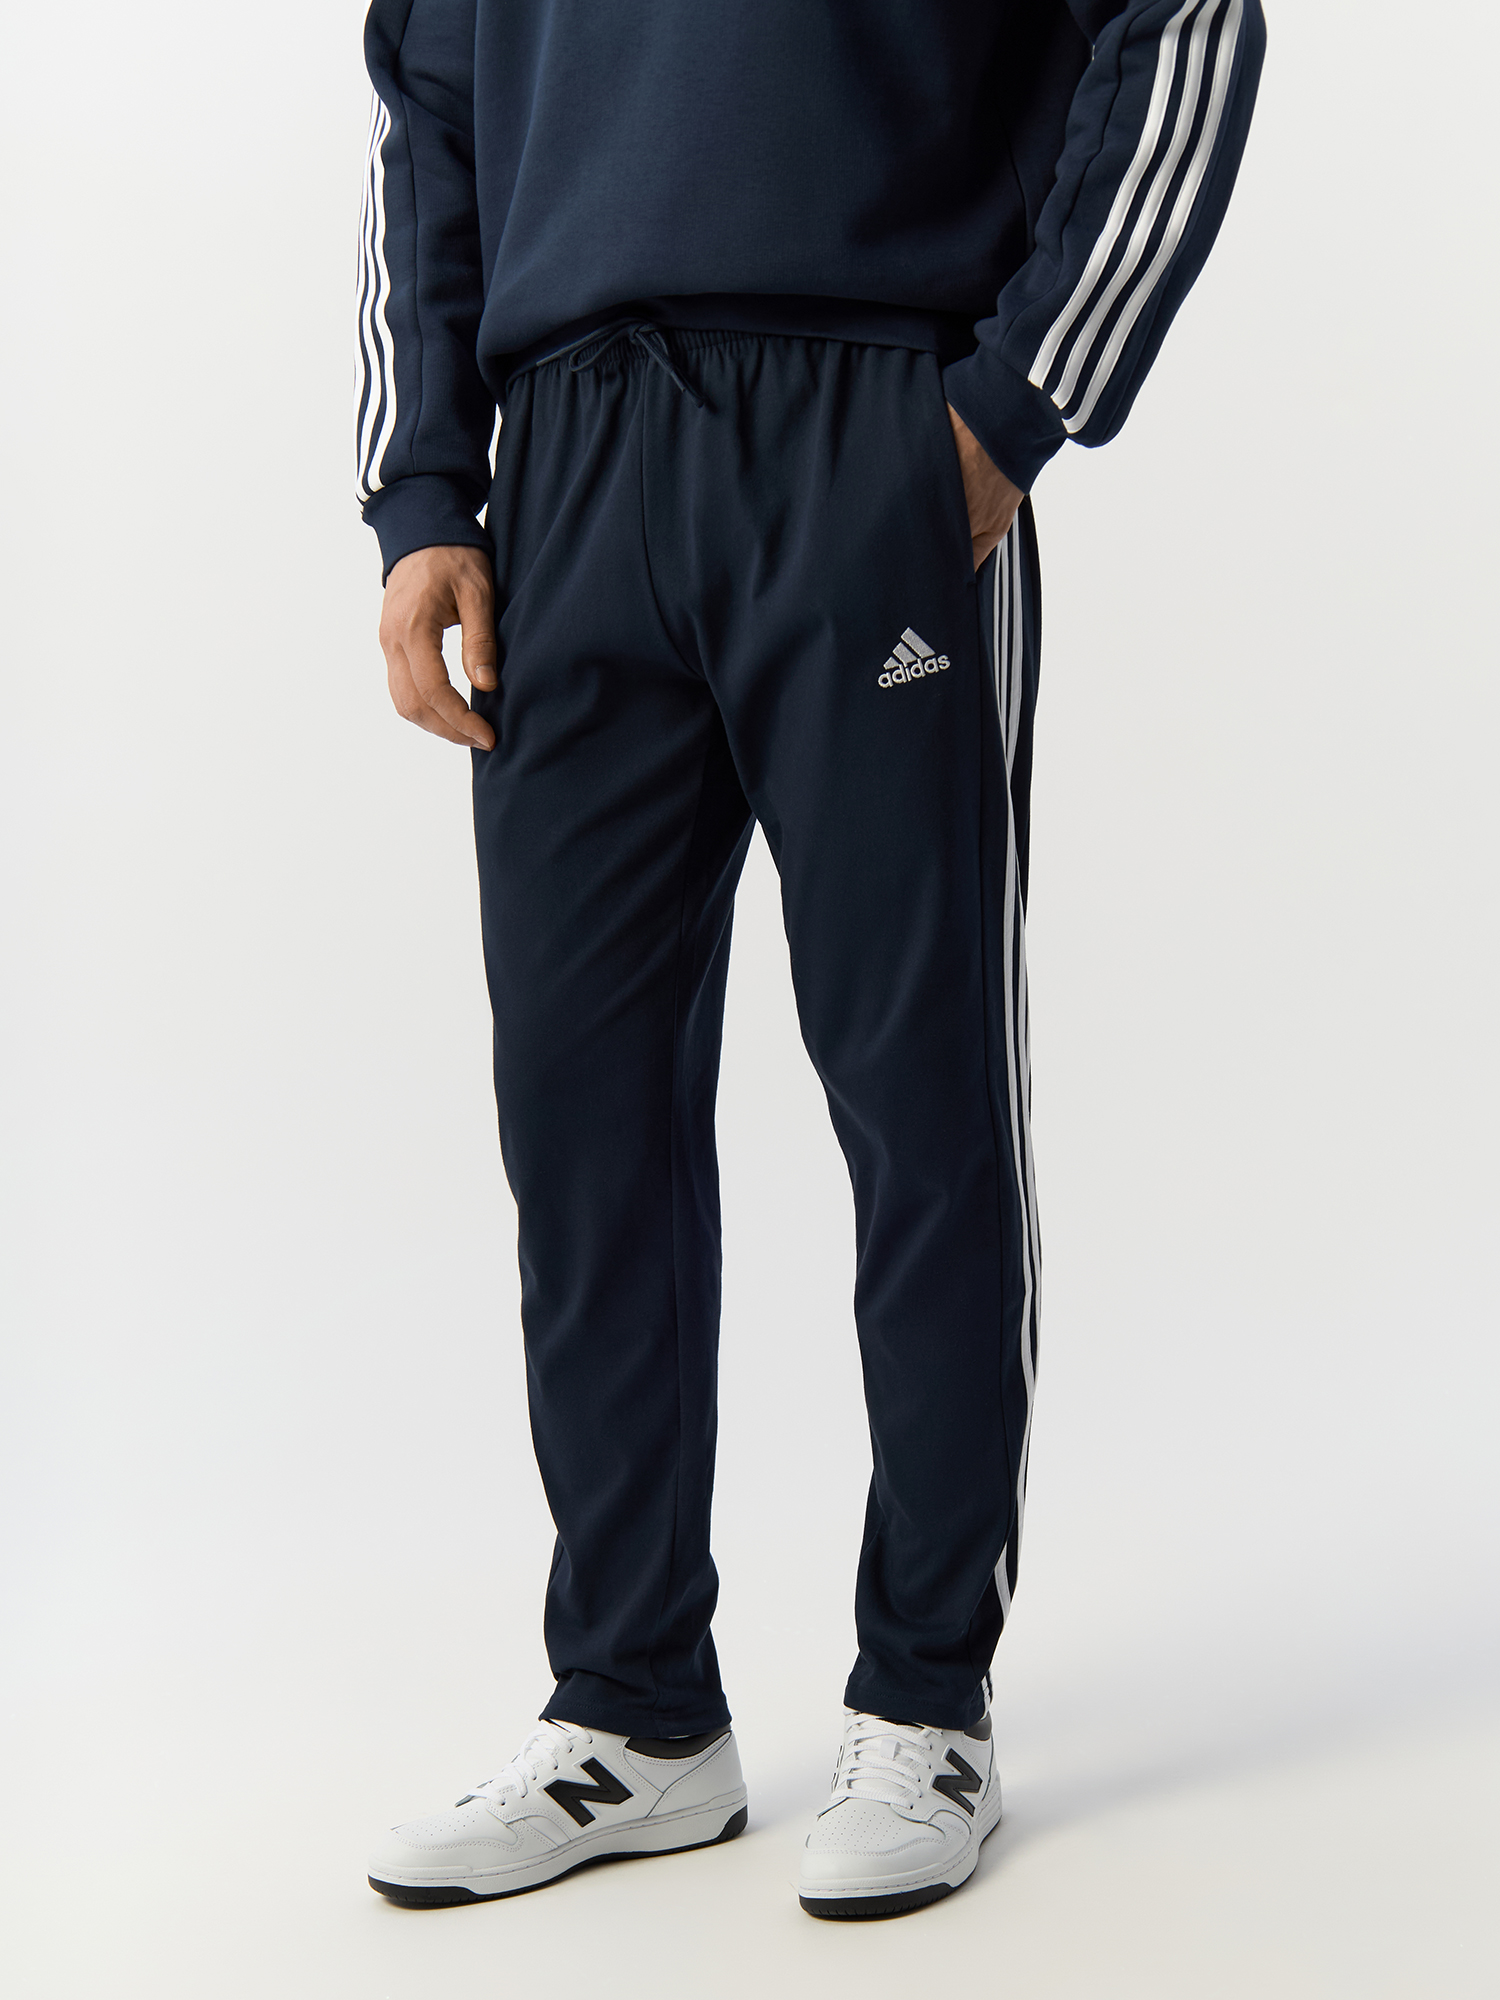 Брюки Adidas для мужчин, спортивные, IC0045, размер S, чёрно-белые-AA35